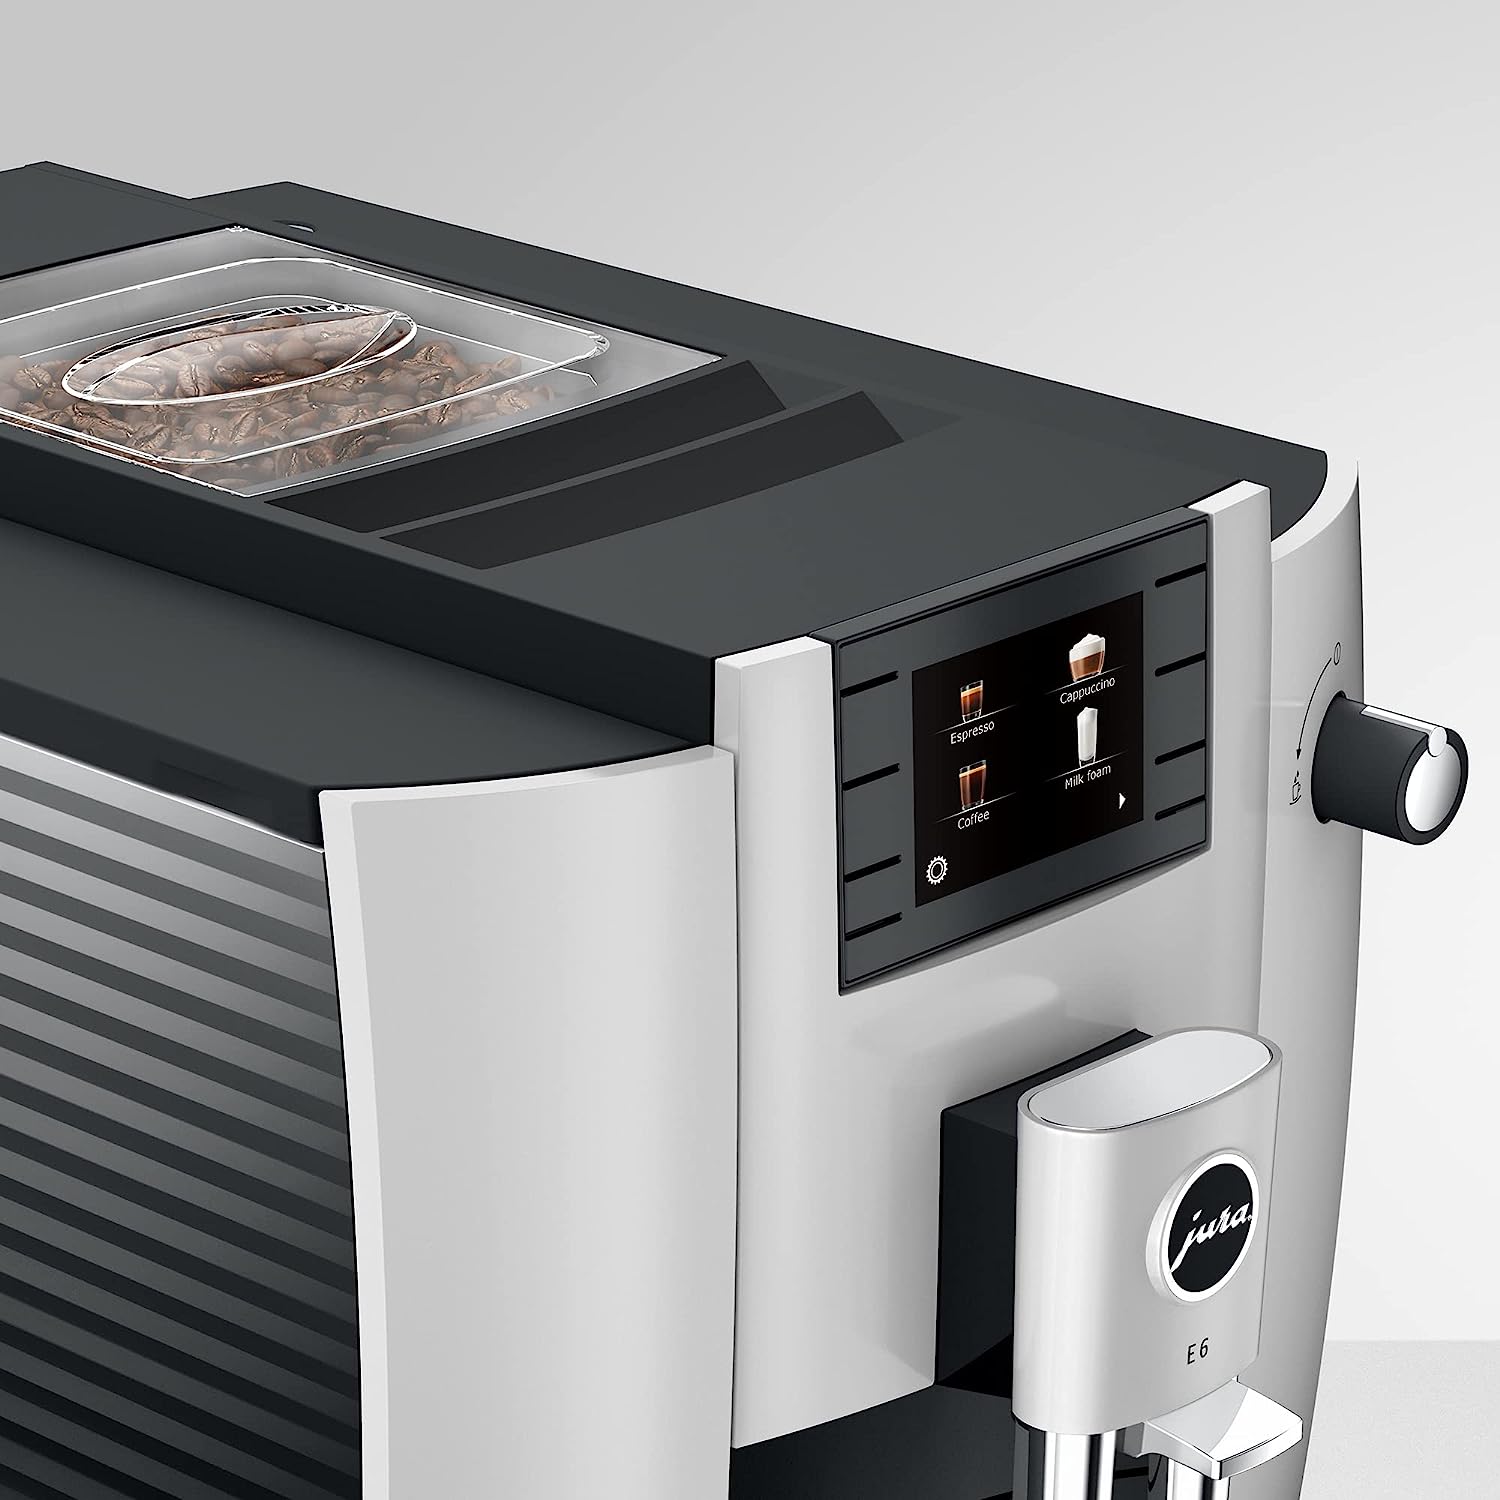 Jura E6 Platinum, Fully Automatic Espresso Maker